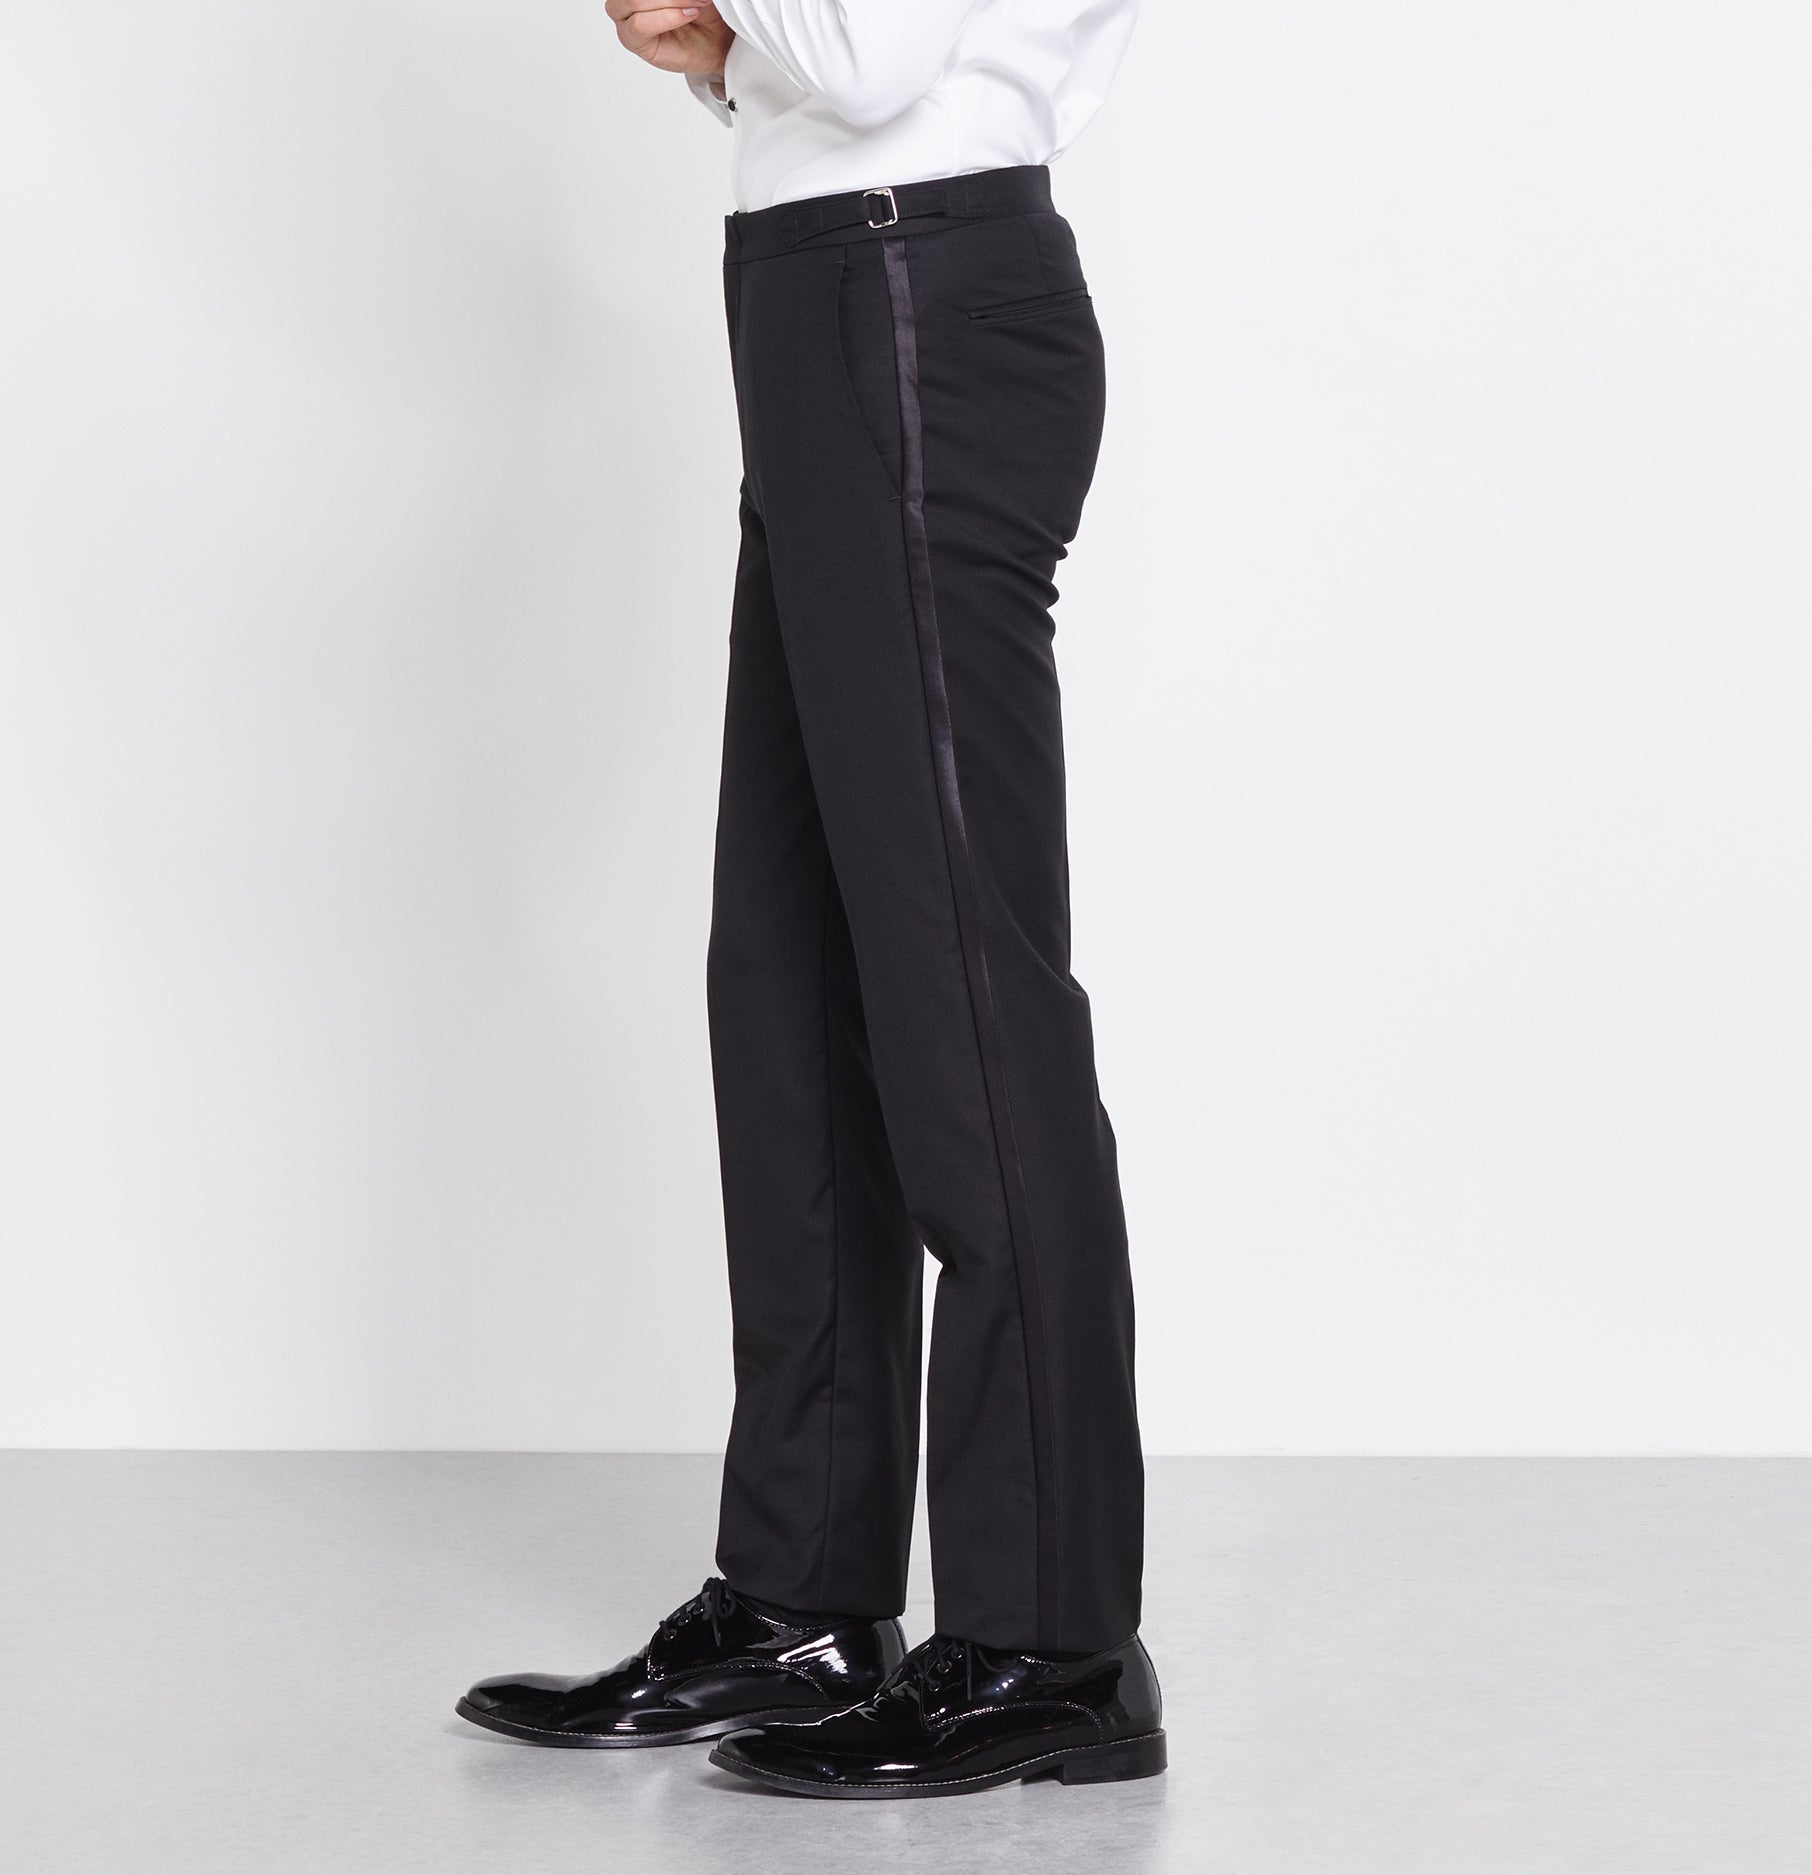 Canali Satin Stripe Tuxedo Pants in Black for Men  Lyst